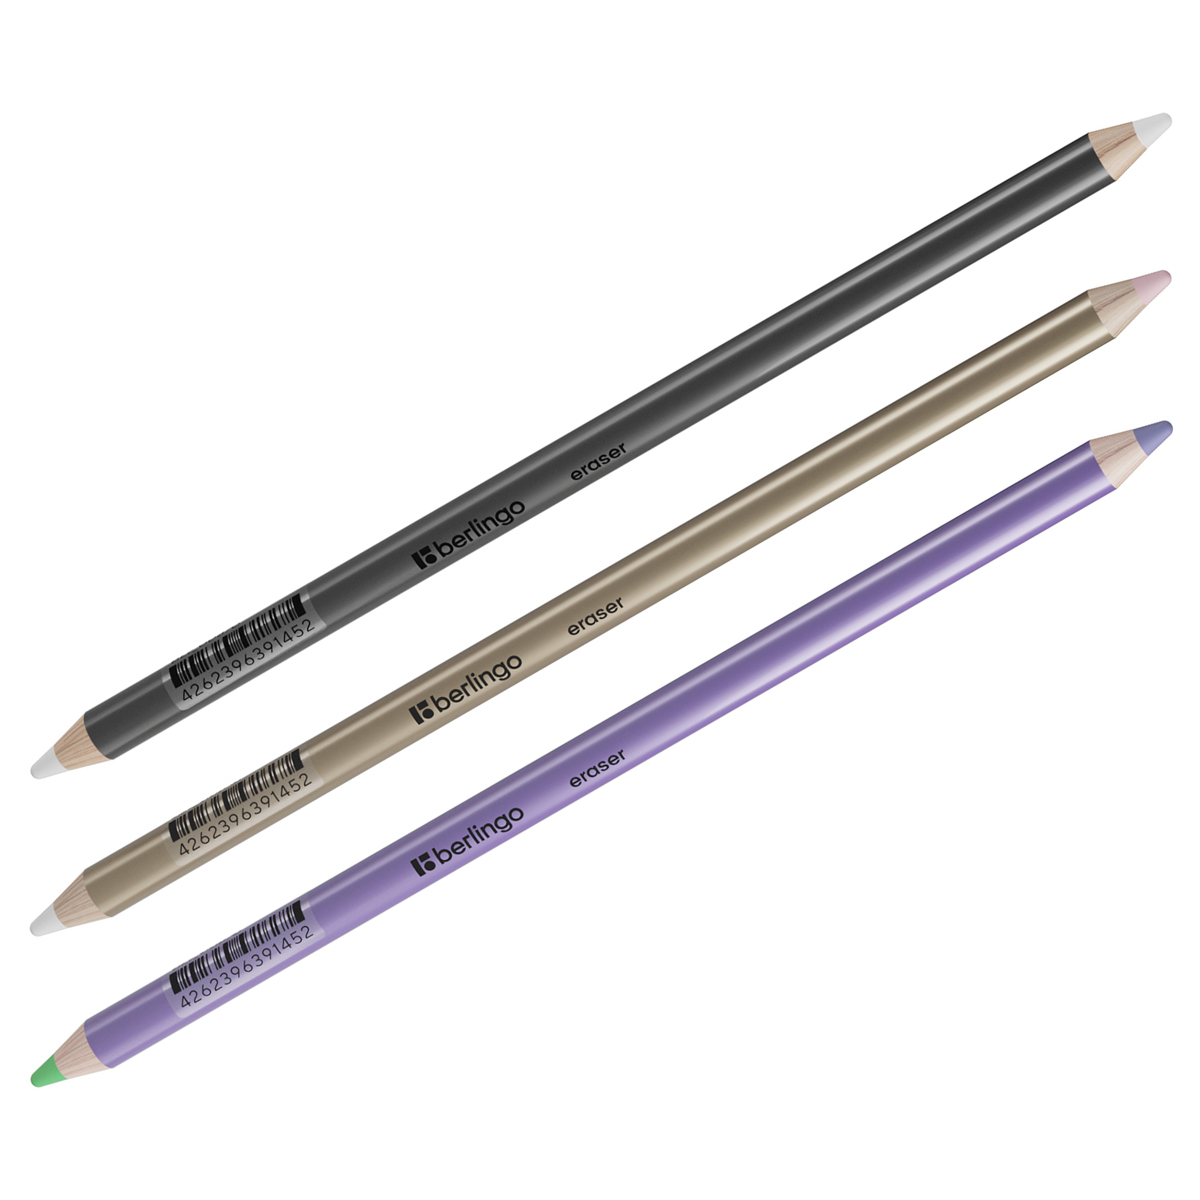 Ластик-карандаш Berlingo Eraze 870 двухсторонний круглый цвета ассорти